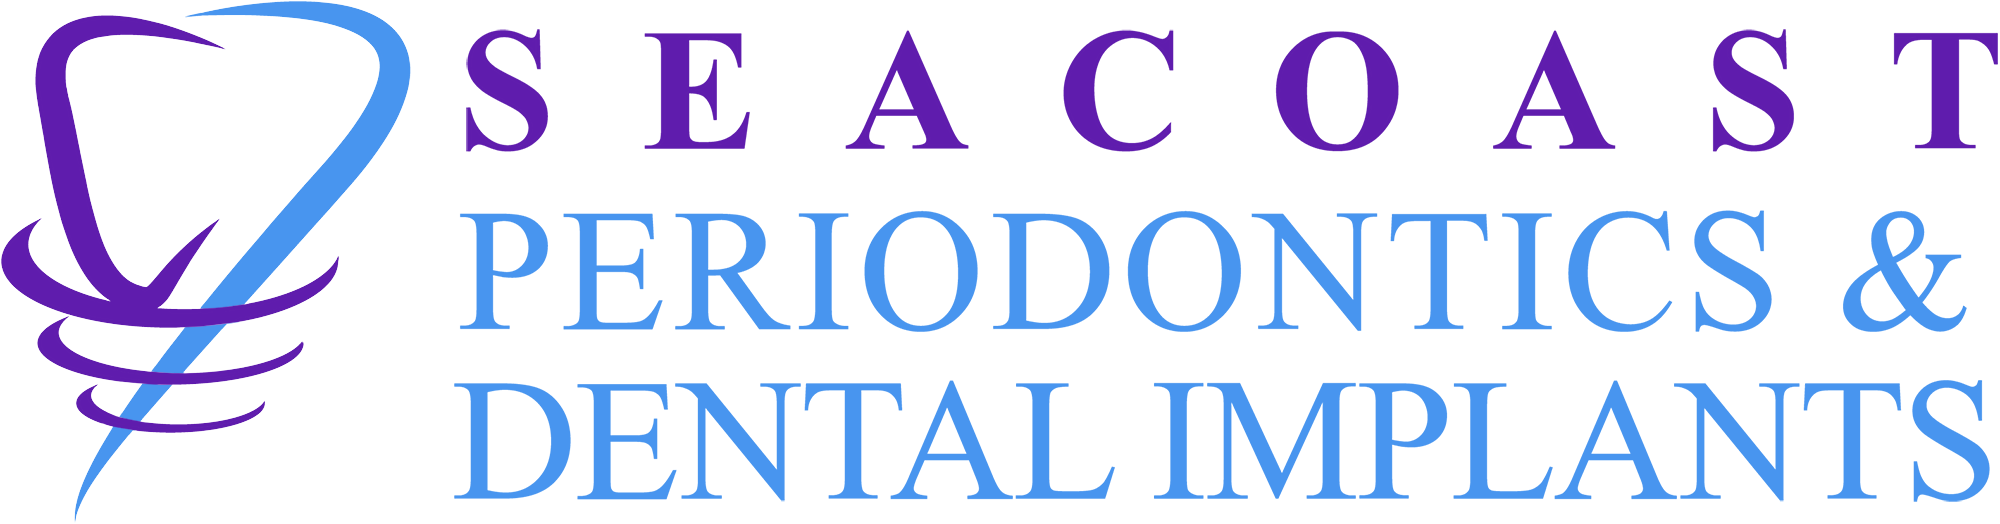 Seacoast Periodontics & Dental Implants